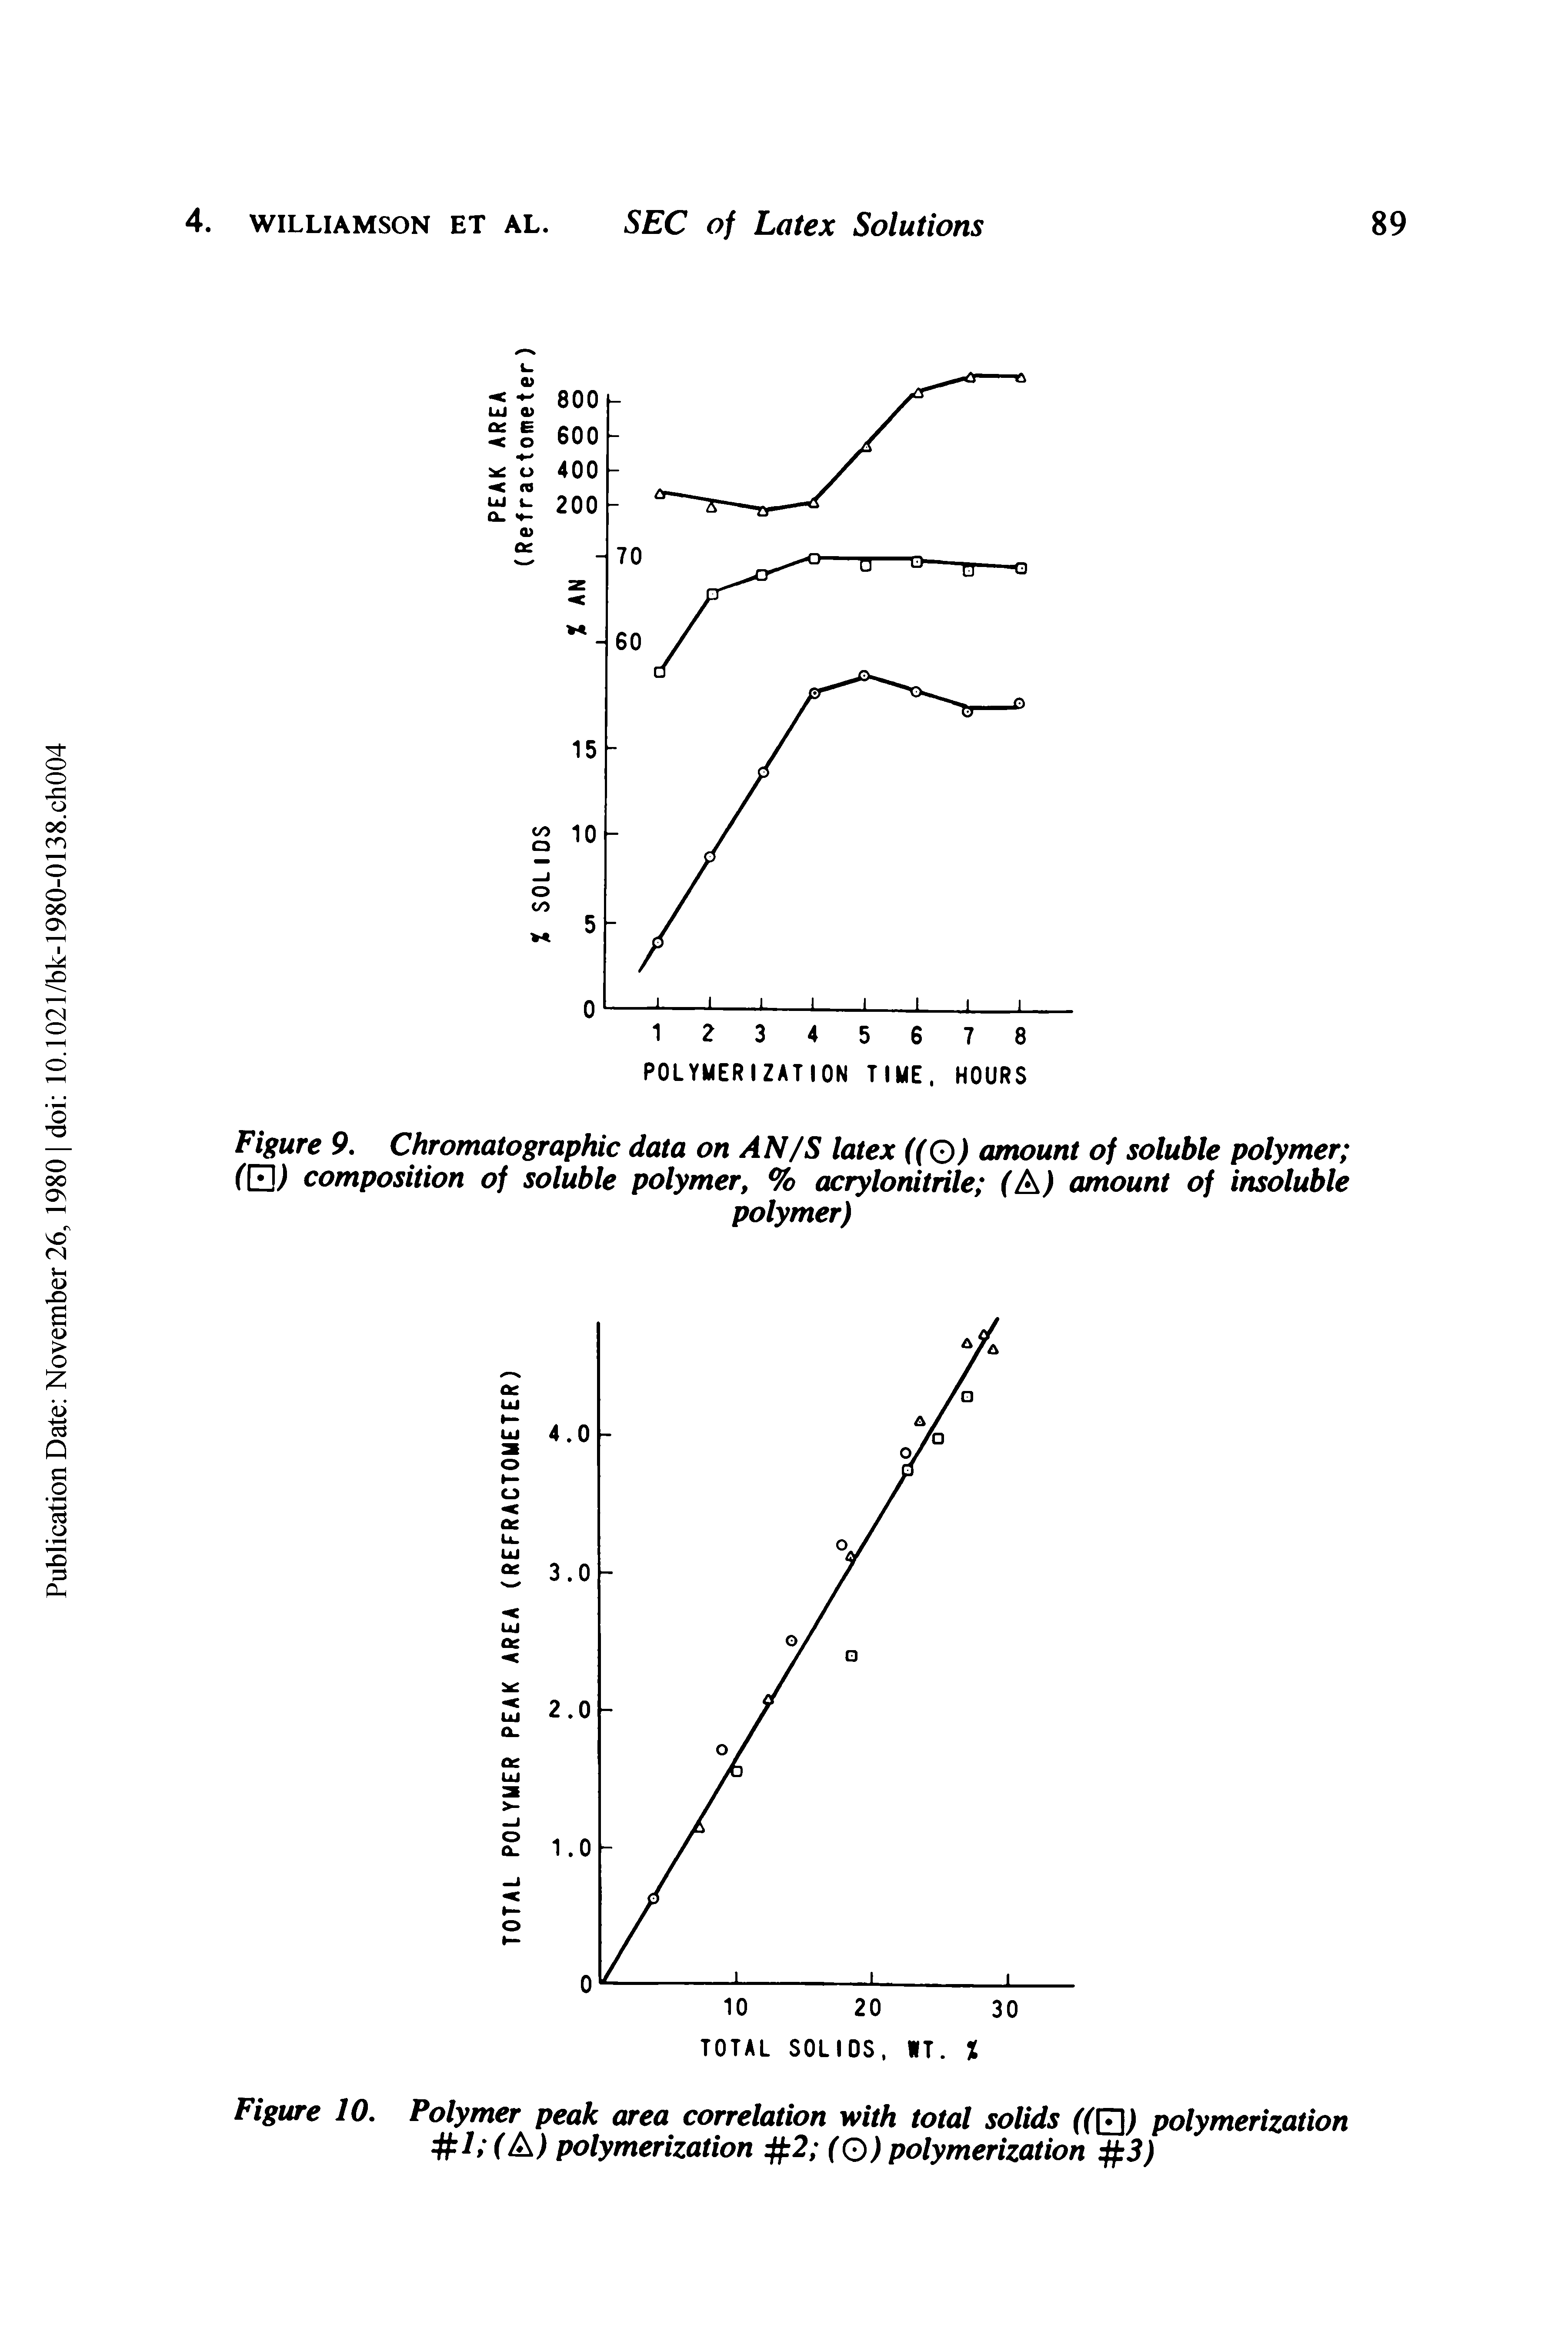 Figure 10. Polymer peak area correlation with total solids (( ) polymerization 1 (A) polymerization 2 (O) polymerization 3)...